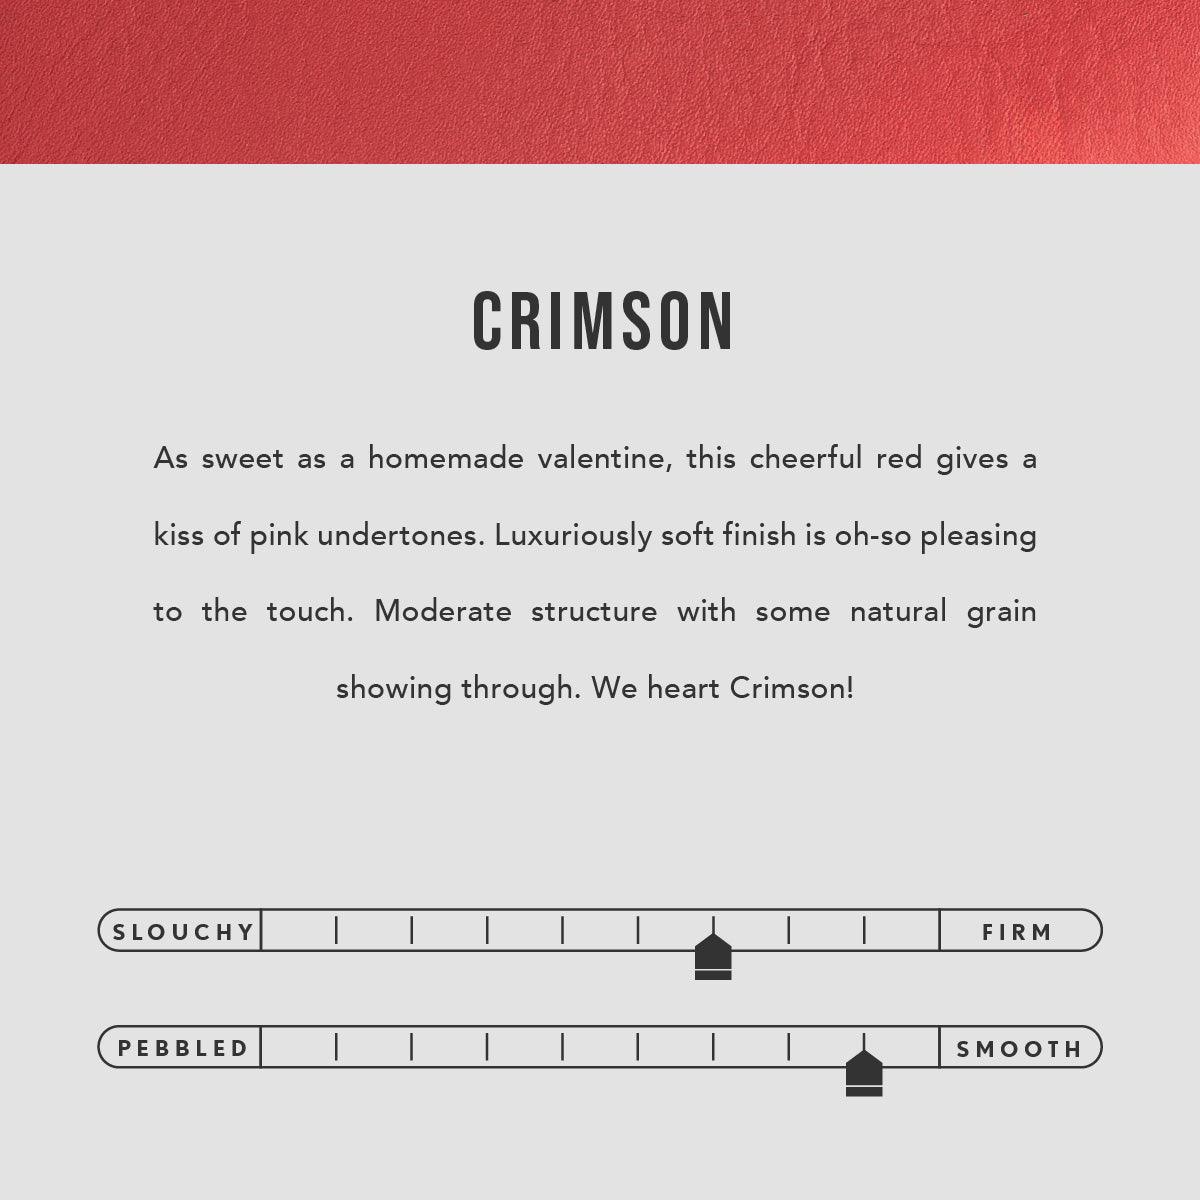 Crimson | infographic